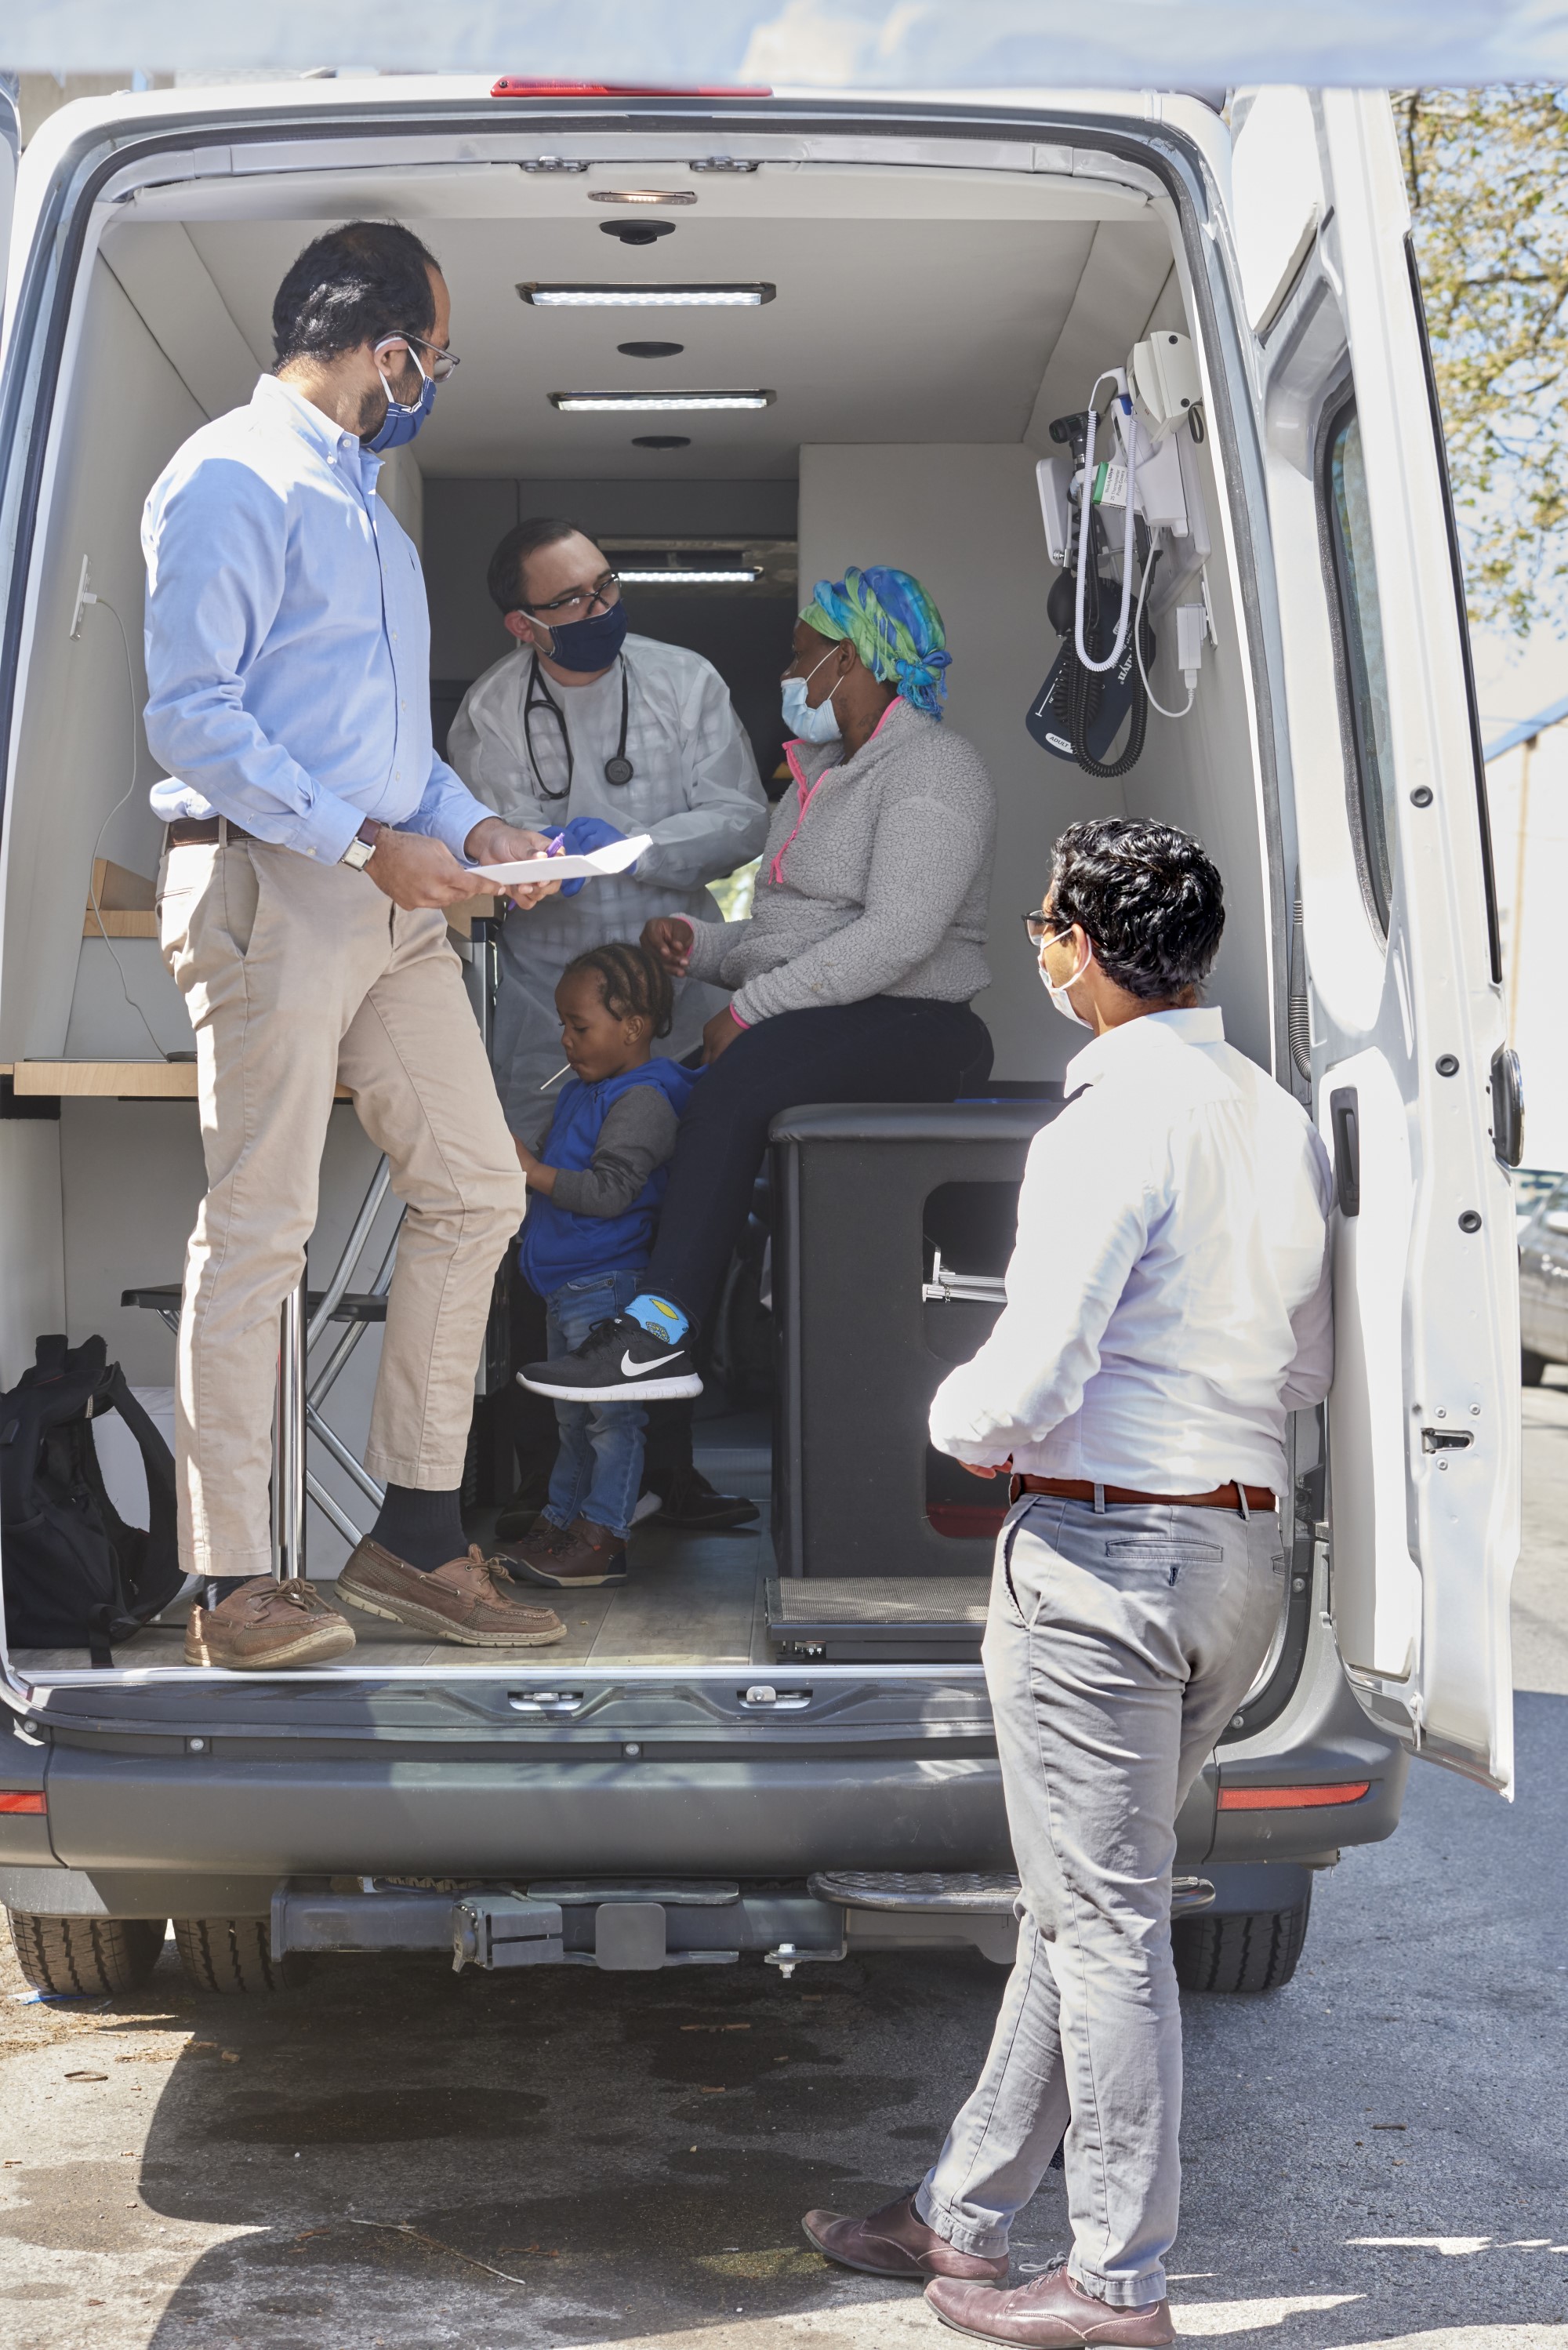 Inside of medical van with patients